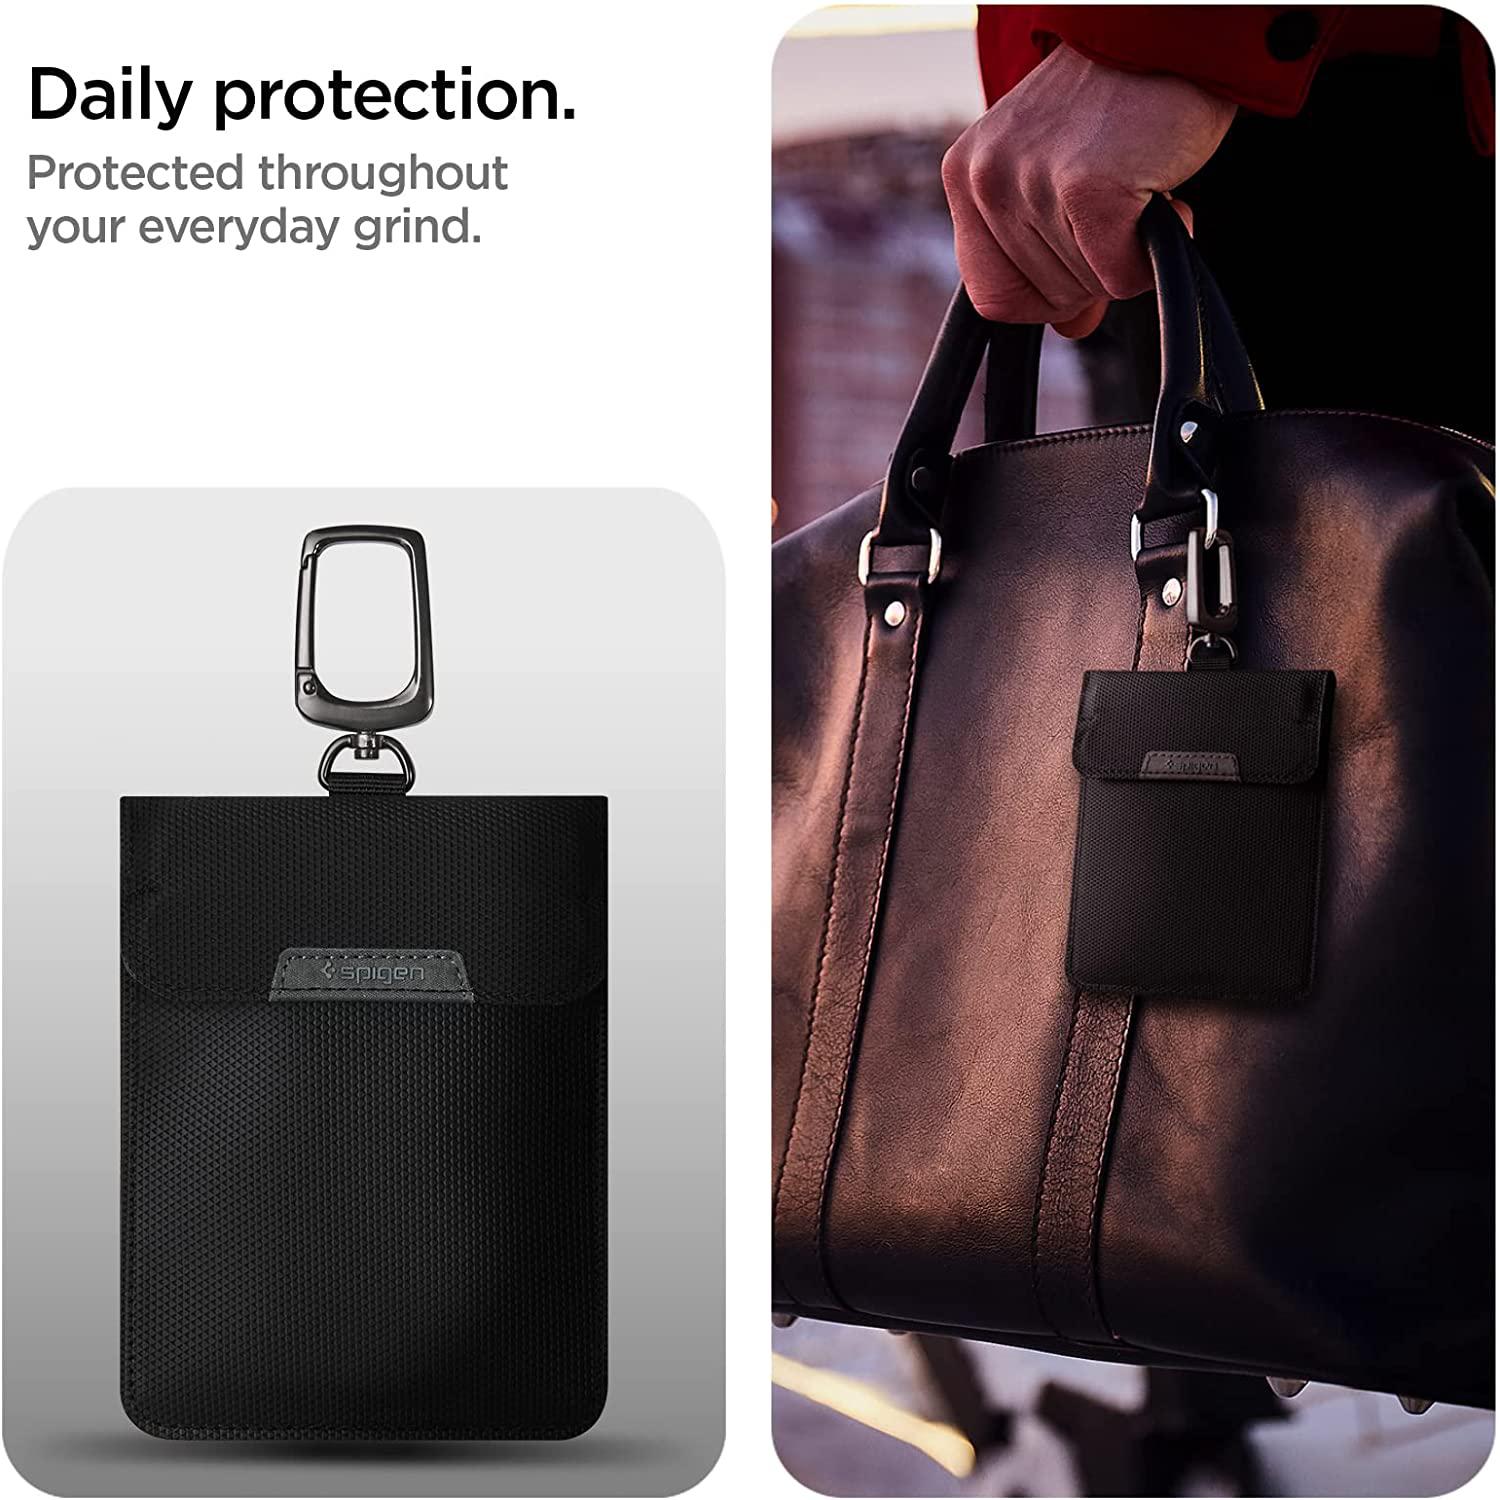 Spigen® Klasden AFA03754 RFID Anti - Theft Car Key Protector Shield Pouch - Black